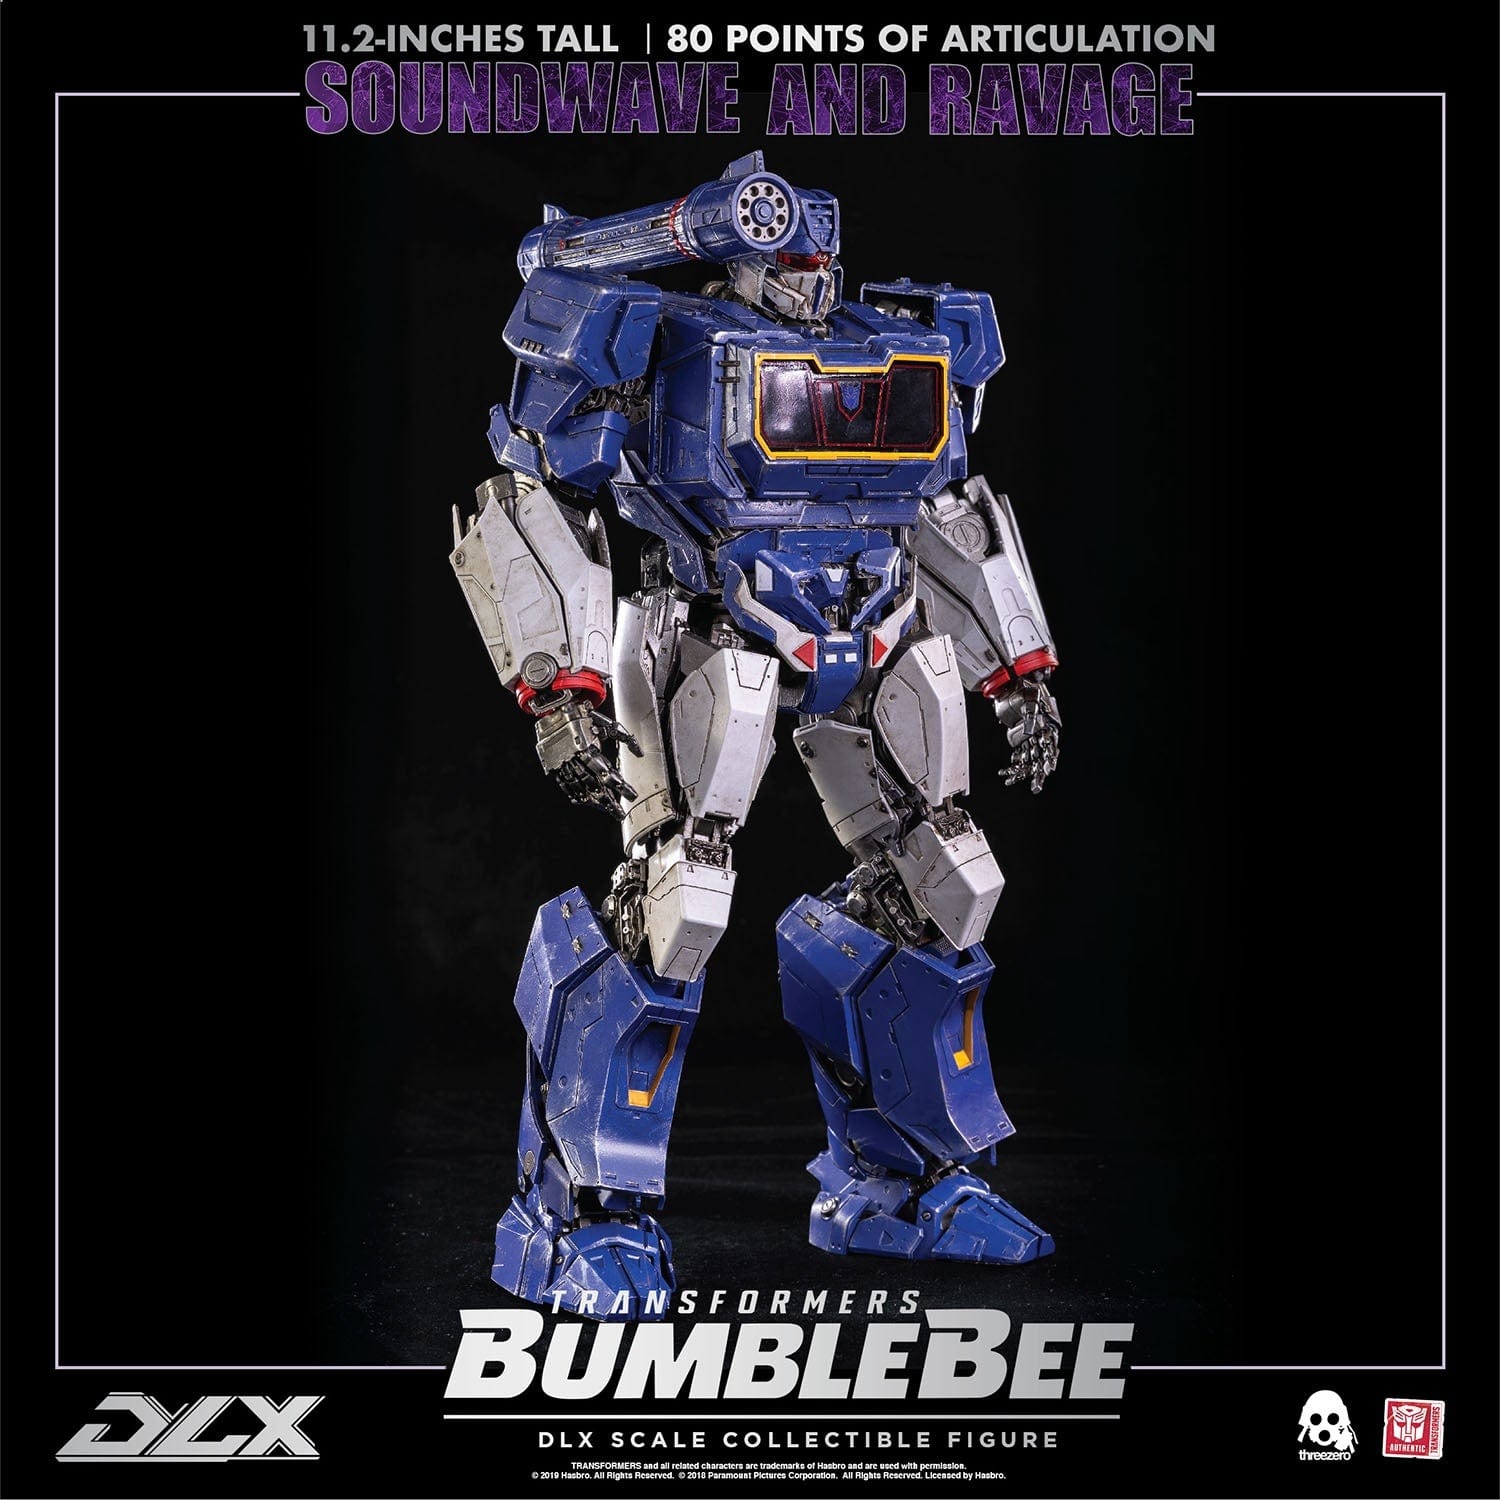 Threezero Transformers Bumblebee DLX Soundwave and Ravage Action Figures